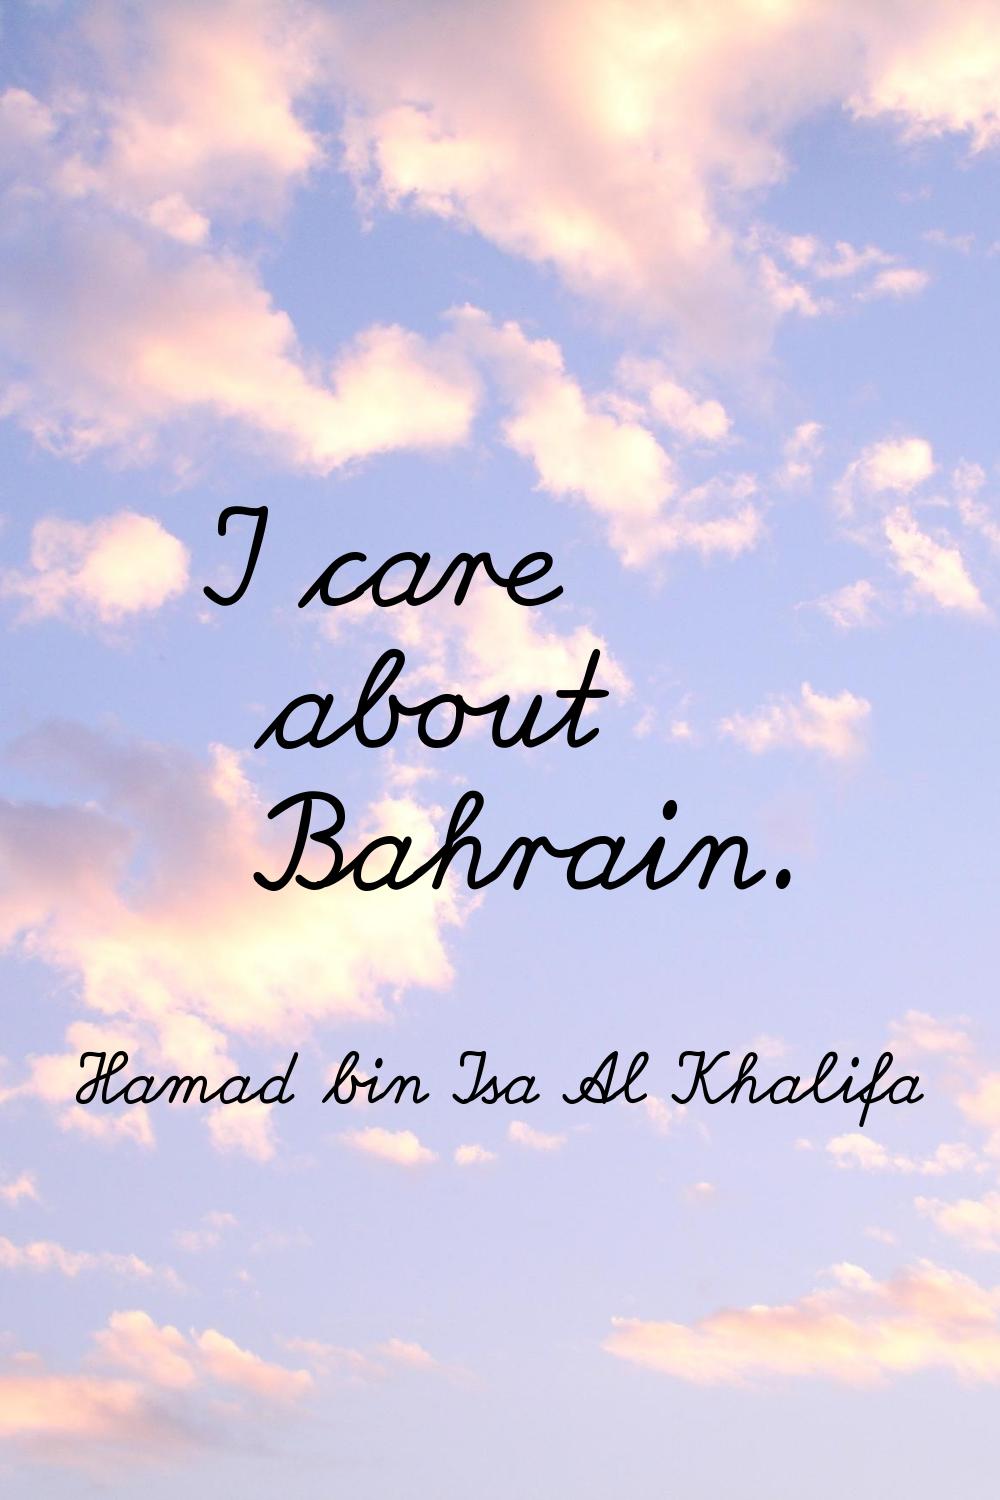 I care about Bahrain.